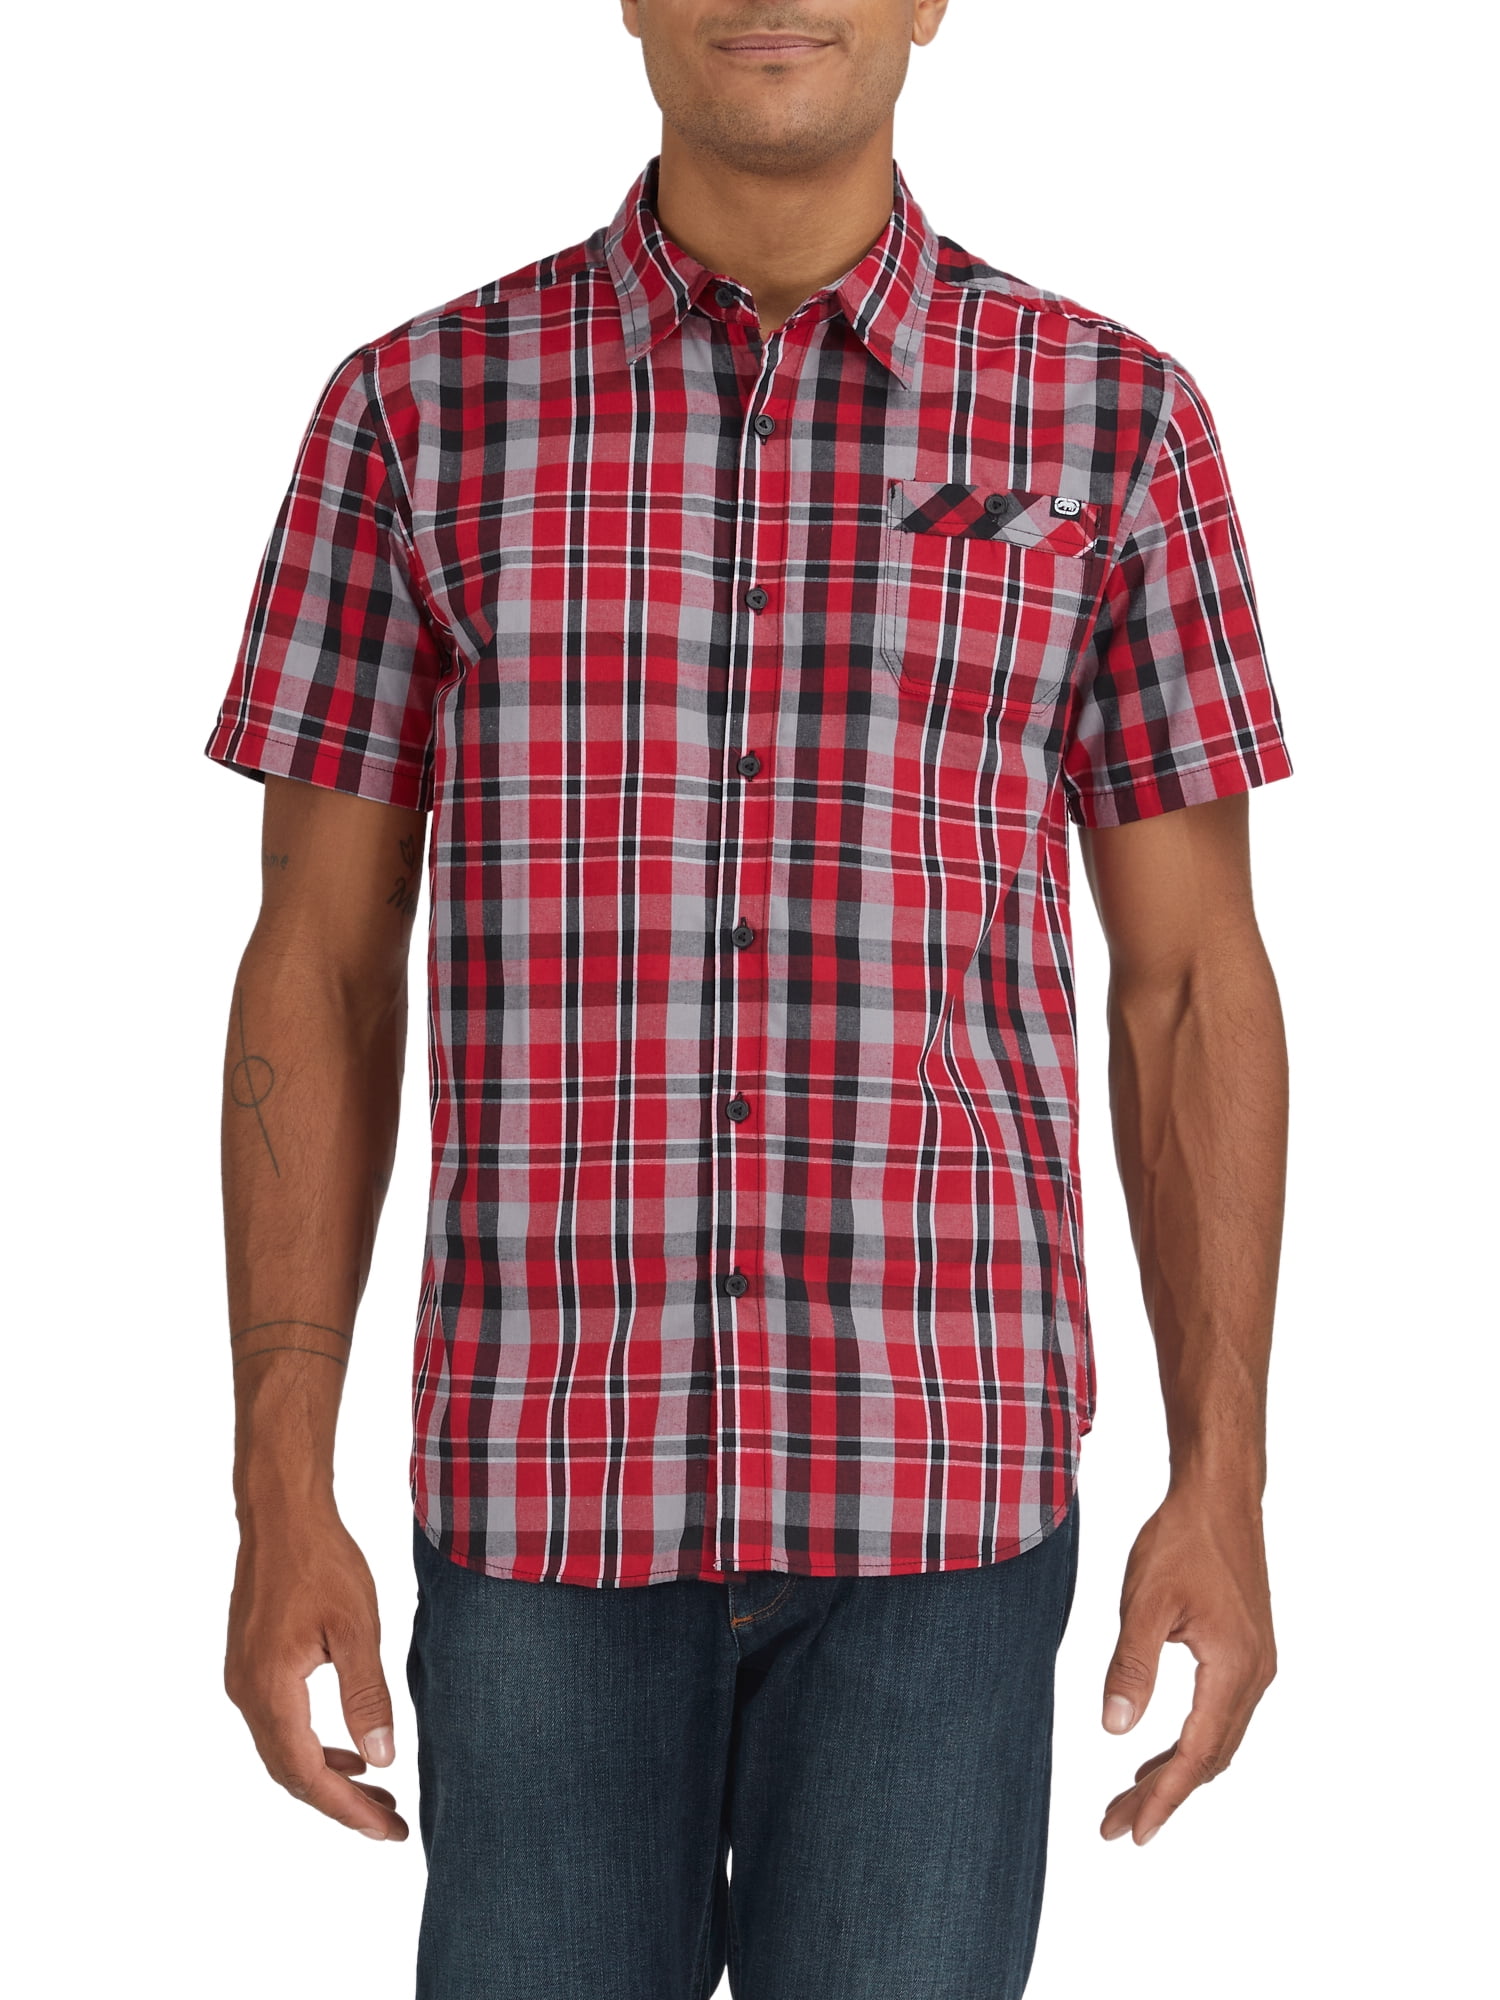 Ecko unltd. Men's Confront Short Sleeve Plaid Woven Shirt - Walmart.com